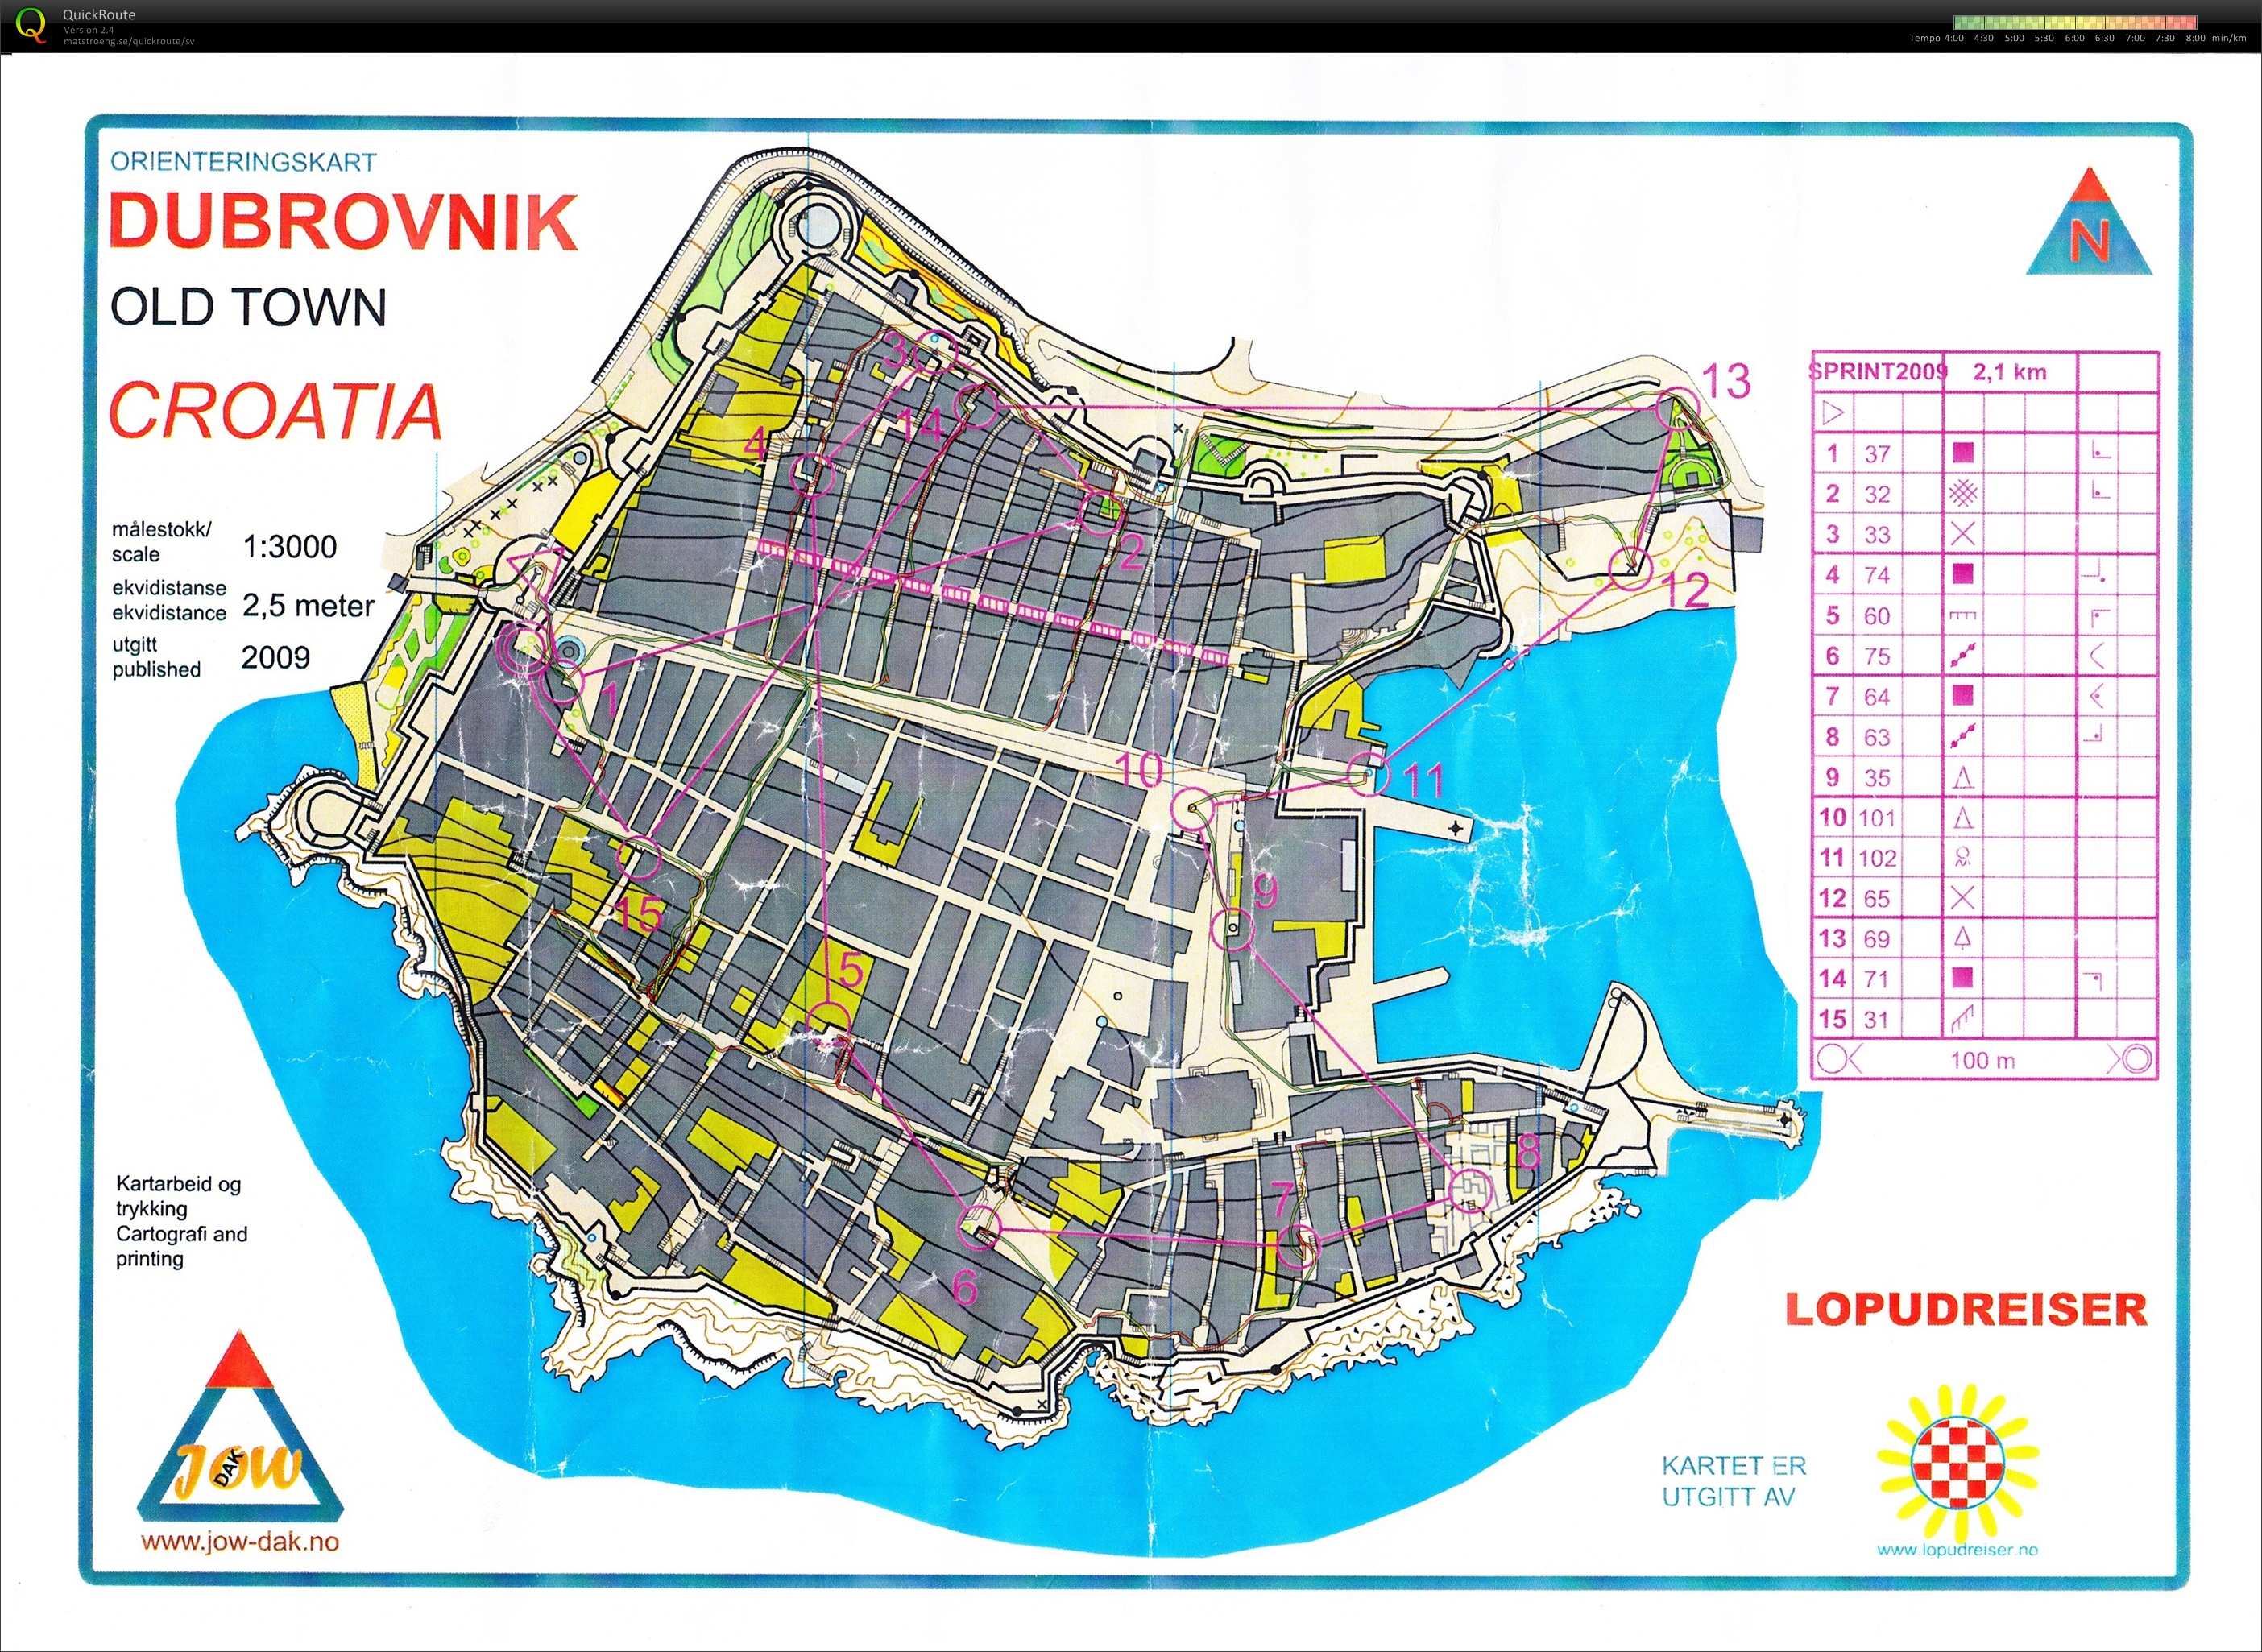 Sprinttrening, Dubrovnik (27.07.2013)